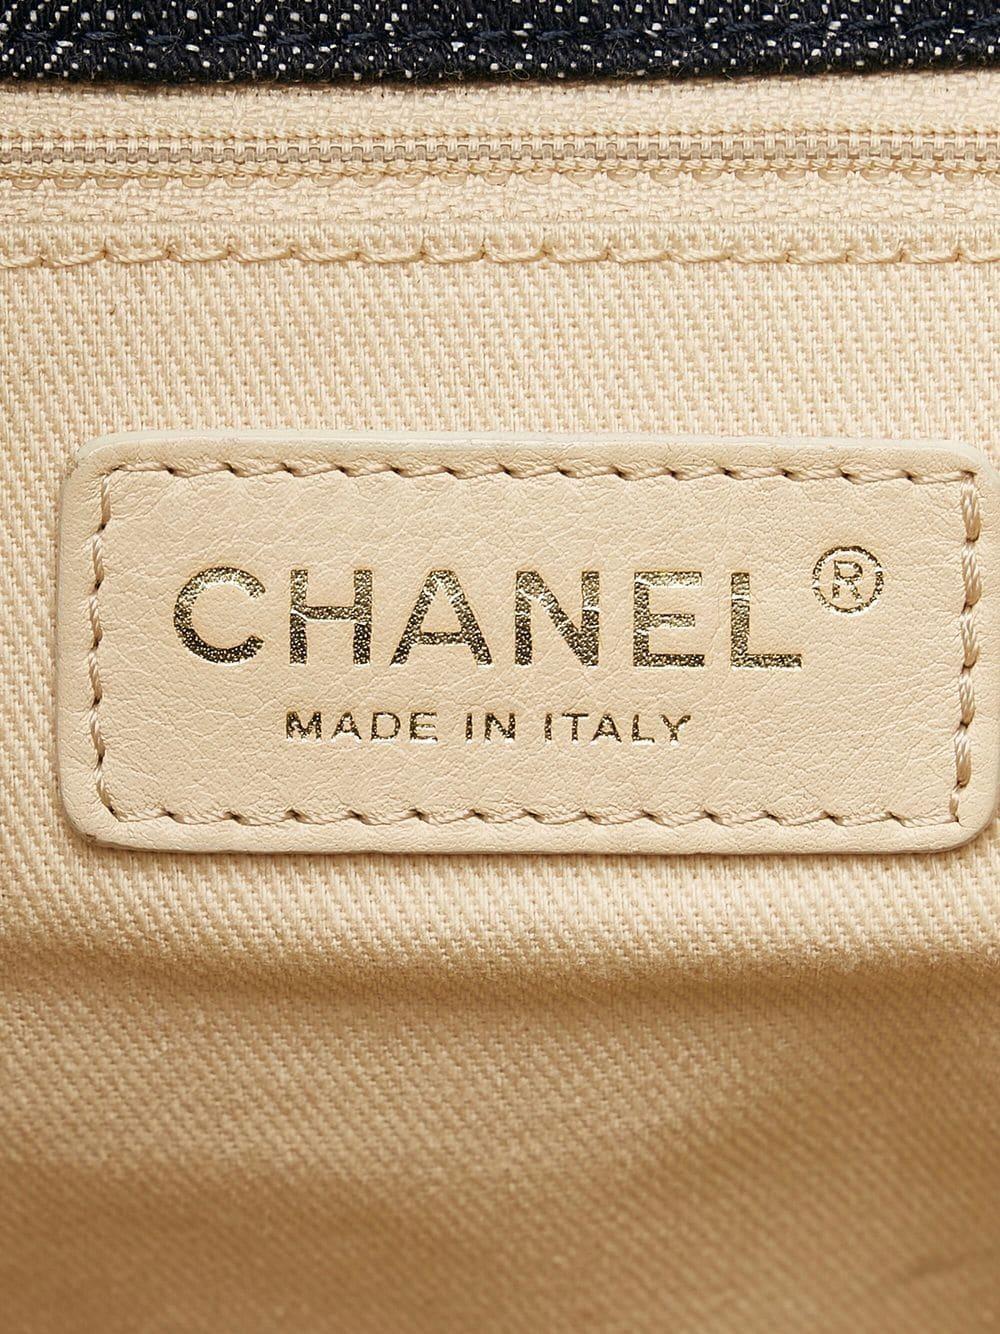 Women's or Men's Chanel 2.55 Reissue Limited Edition Airplanes Flap Blue Denim Shoulder Bag For Sale